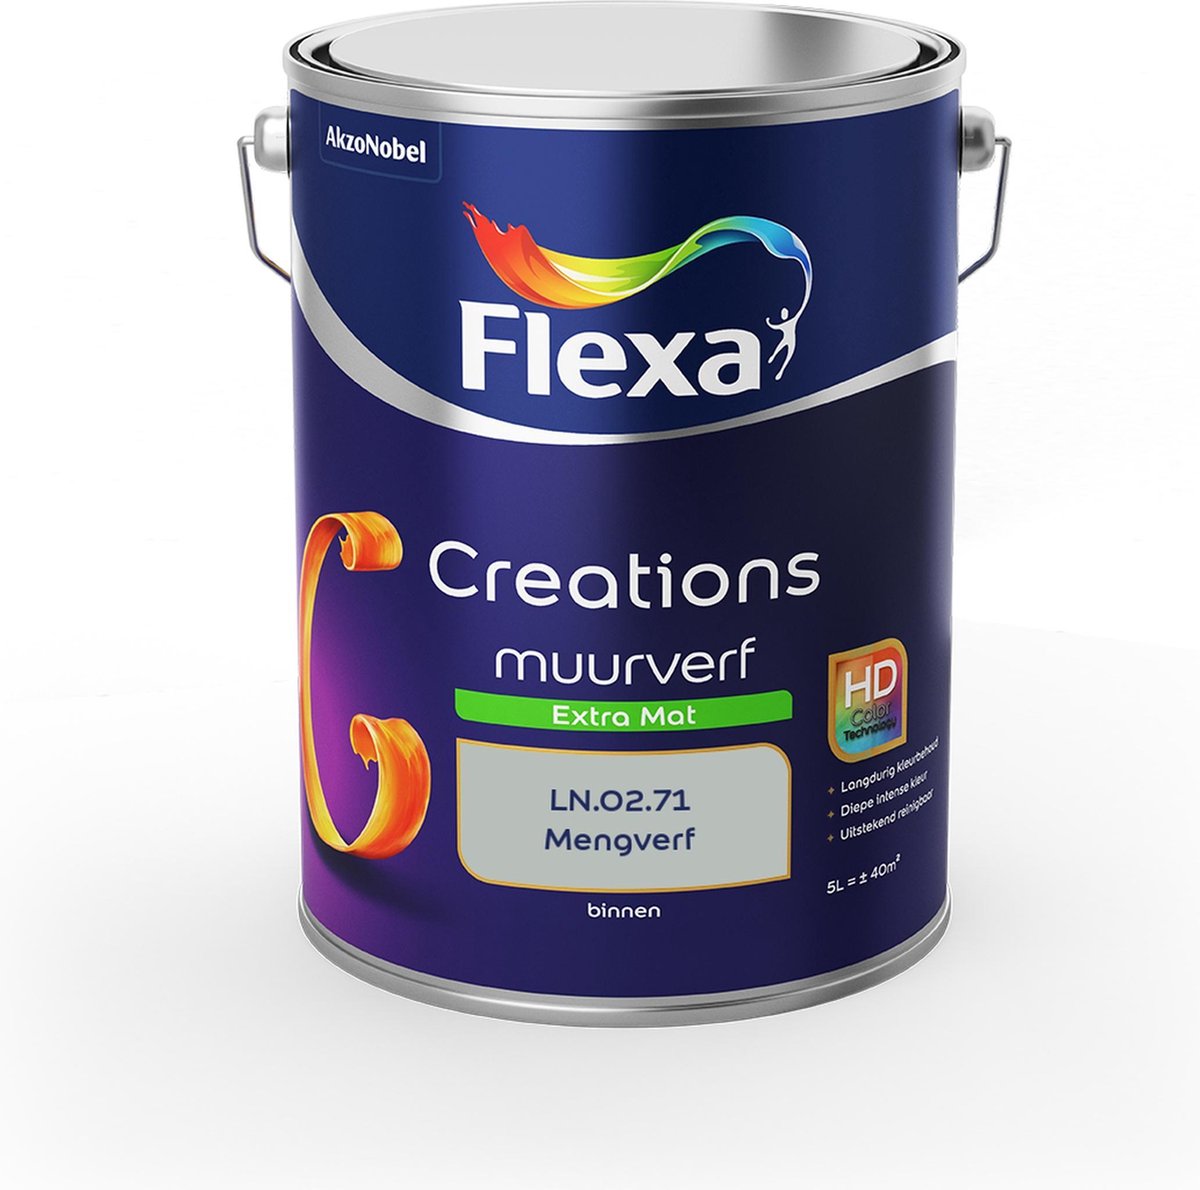 Flexa Creations Muurverf - Extra Mat - Colorfutures 2019 - LN.02.71 - 5 liter